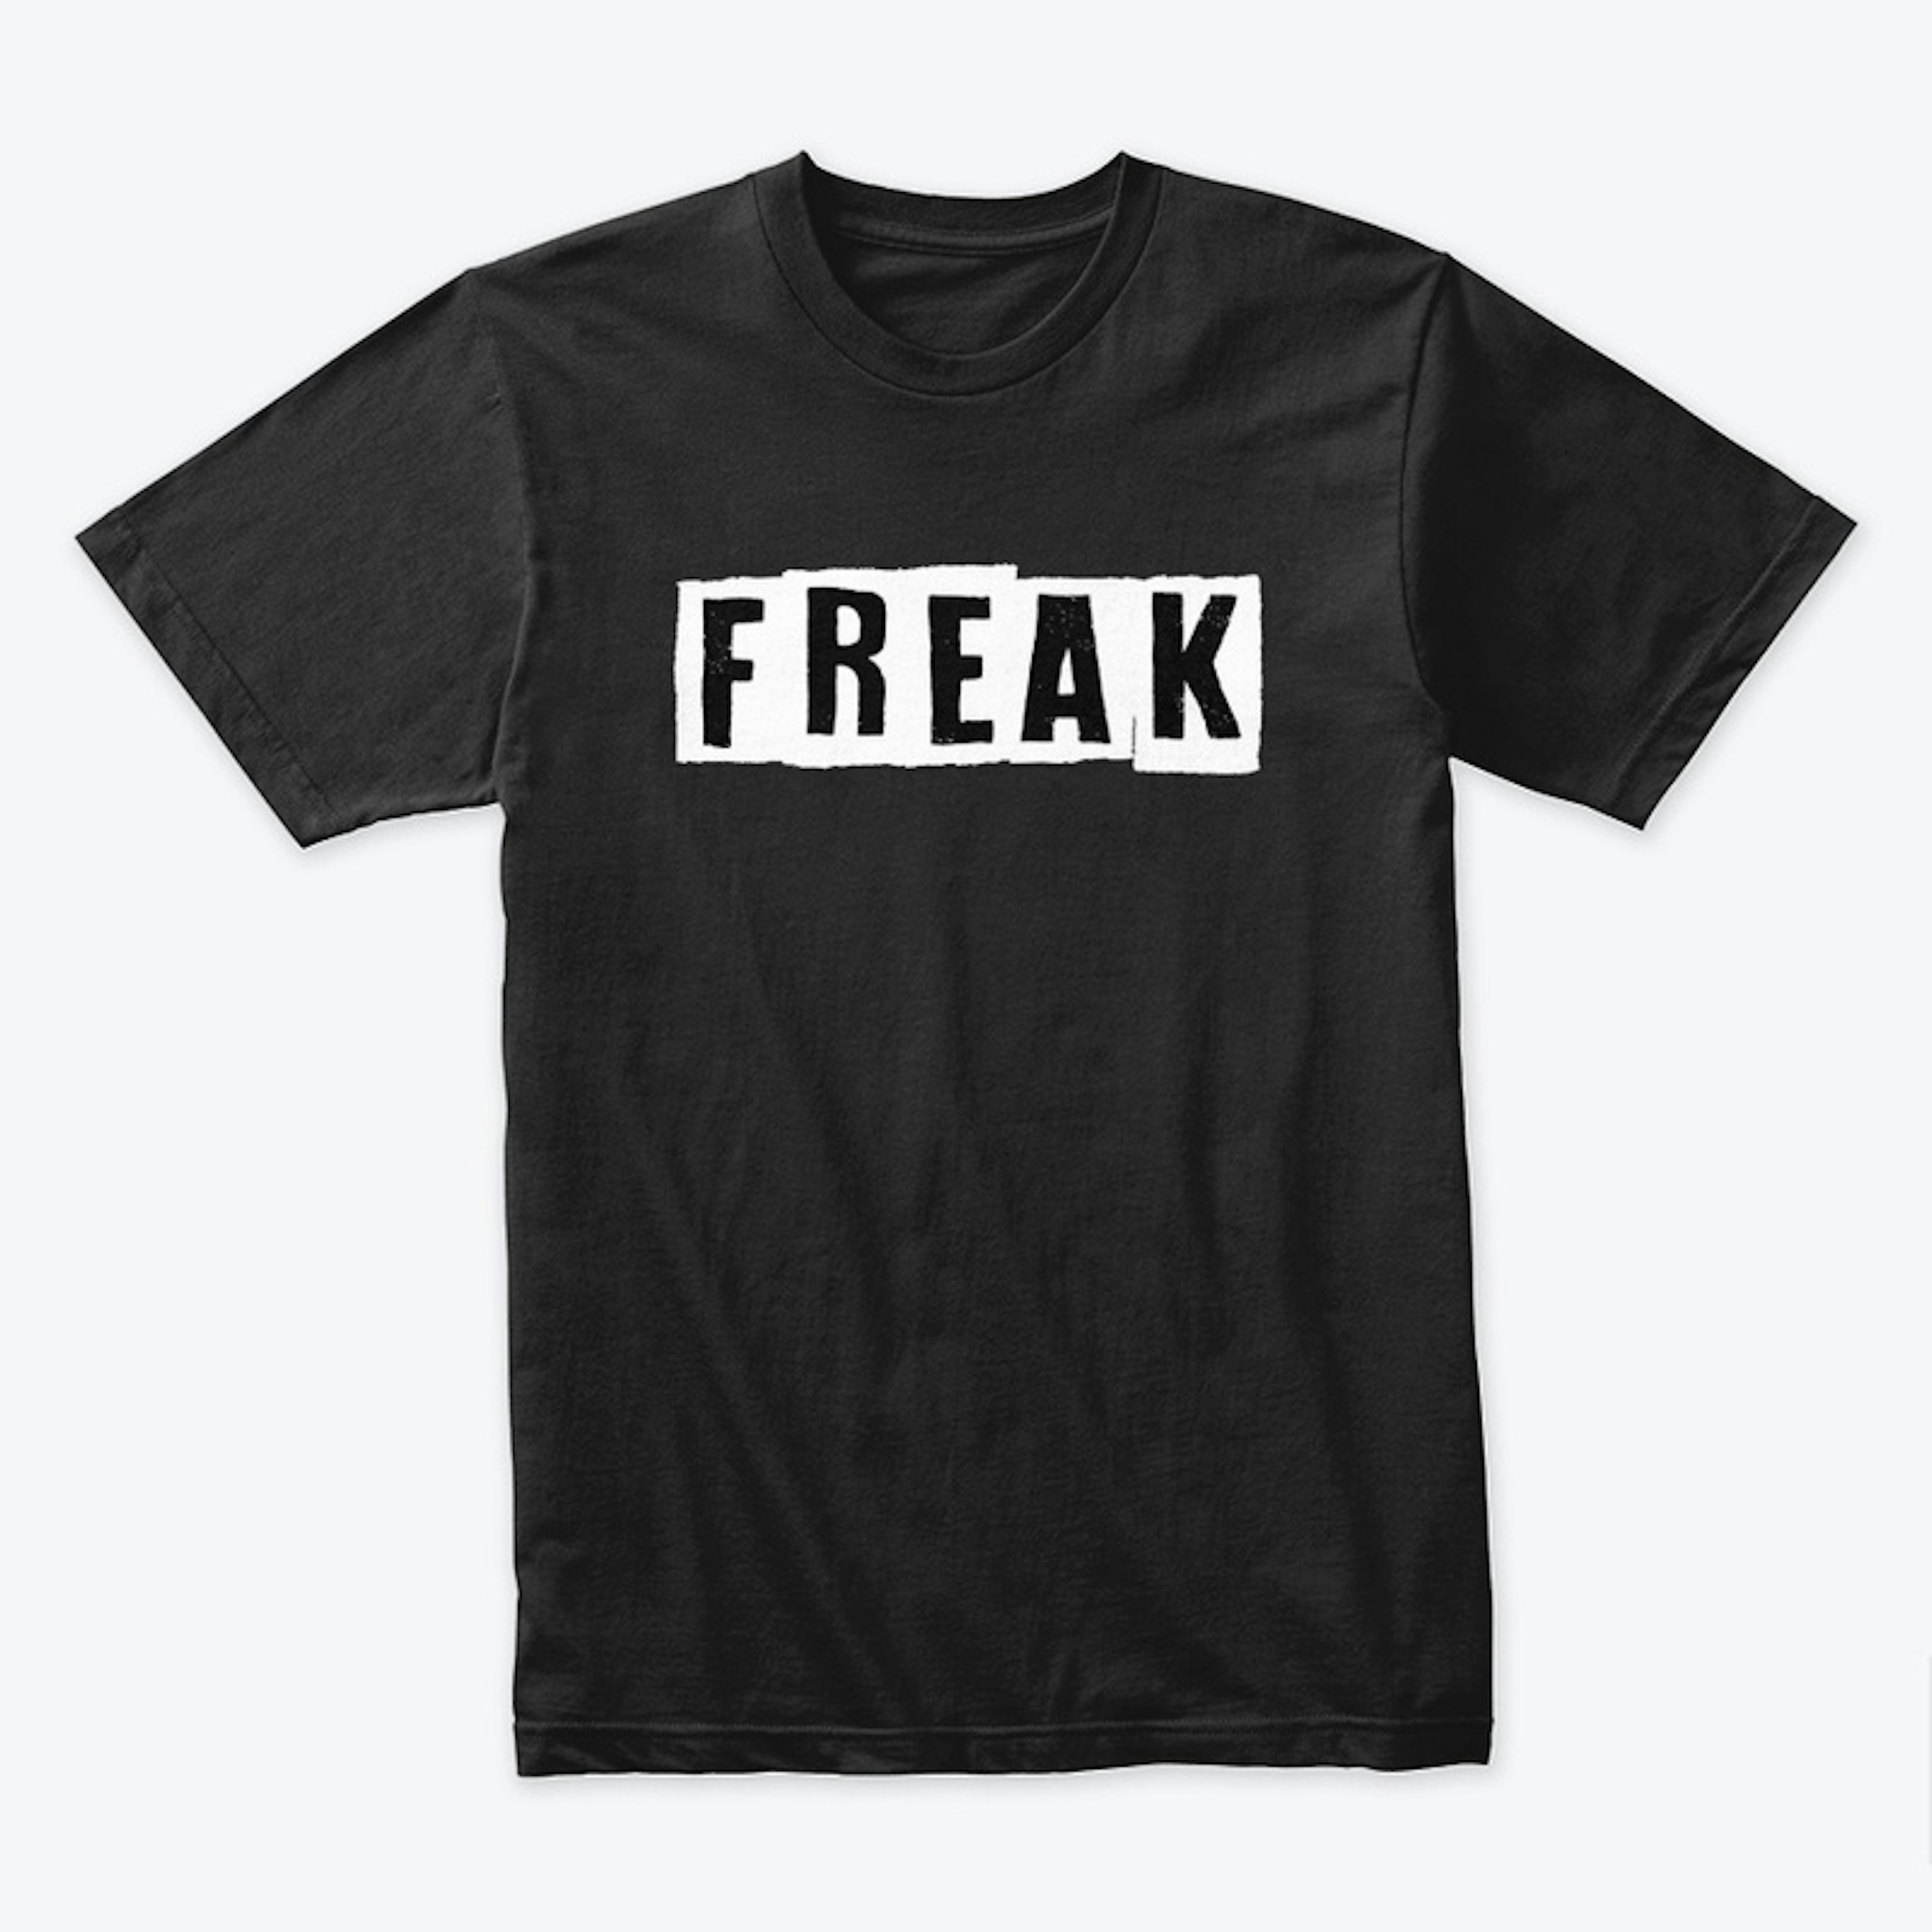 Freak (black)